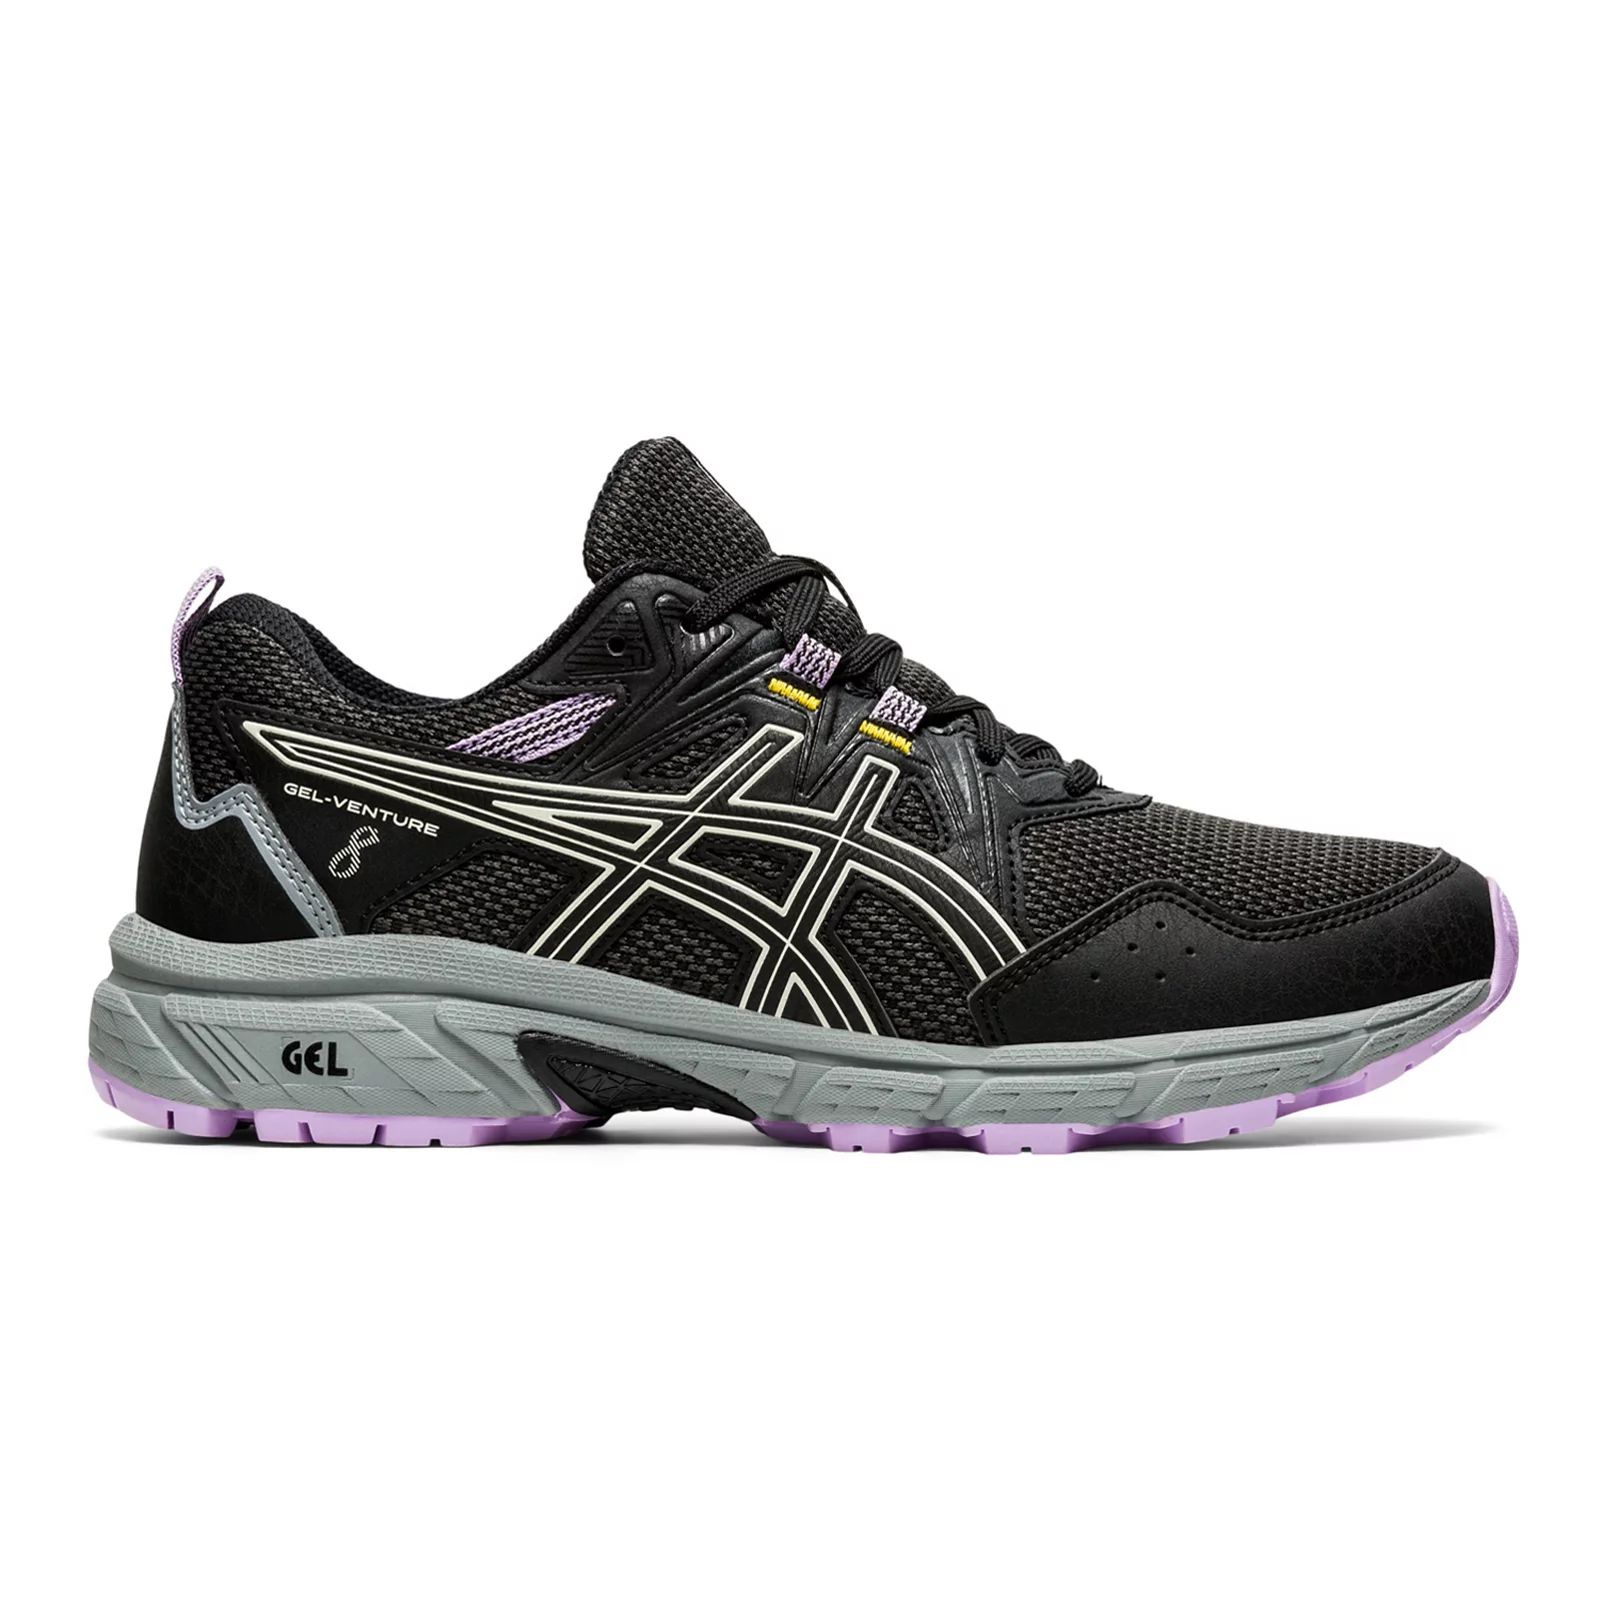 ASICS GEL-Venture 8 Women's Trail Running Shoes, Size: 7.5, Oxford | Kohl's